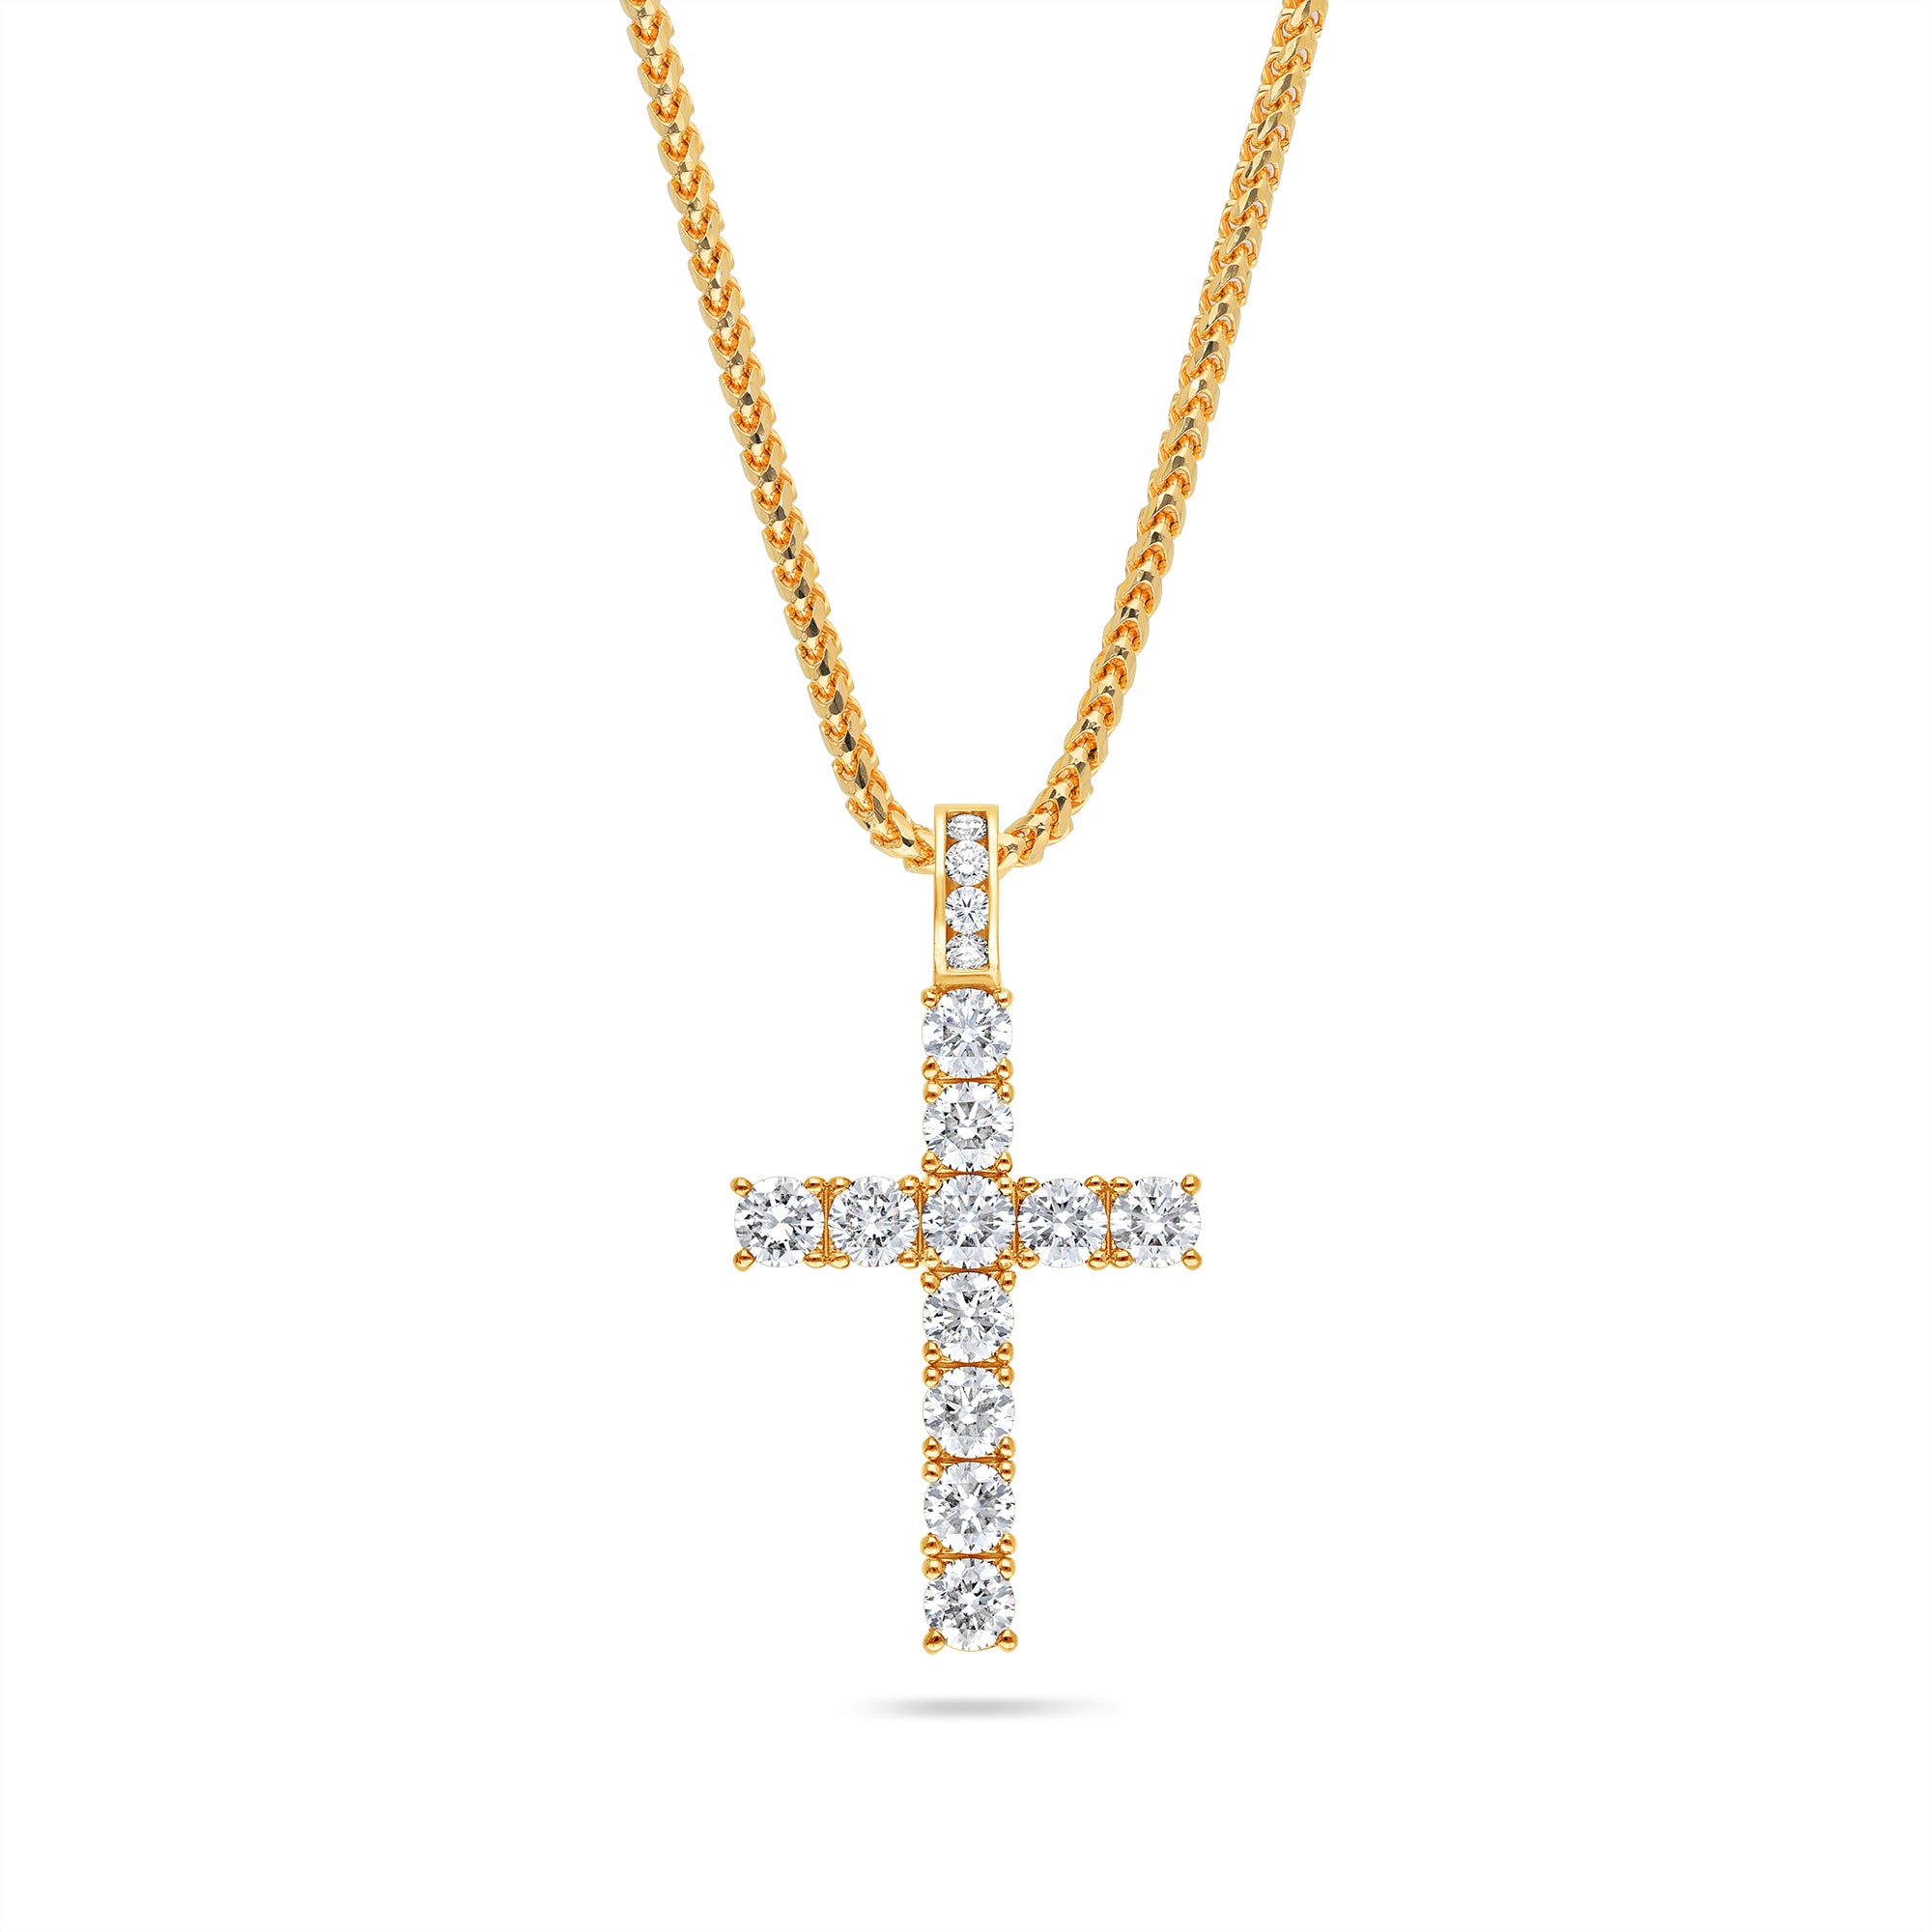 Men's Diamond Cross Necklace in Stainless Steel, 24